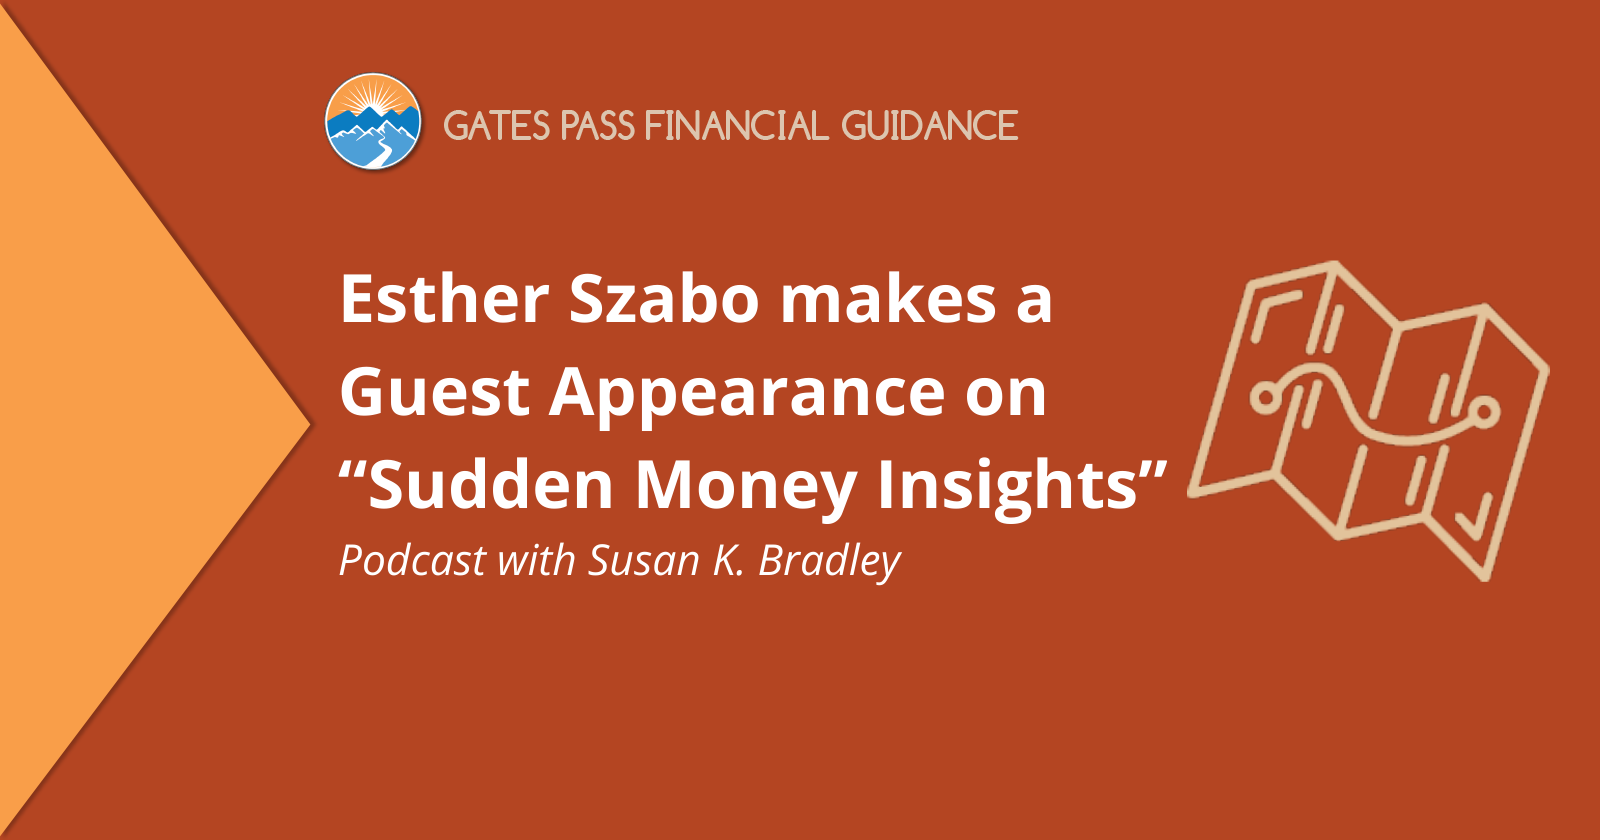 Esther Szabo on the “Sudden Money Insights” Podcast with Susan K. Bradley